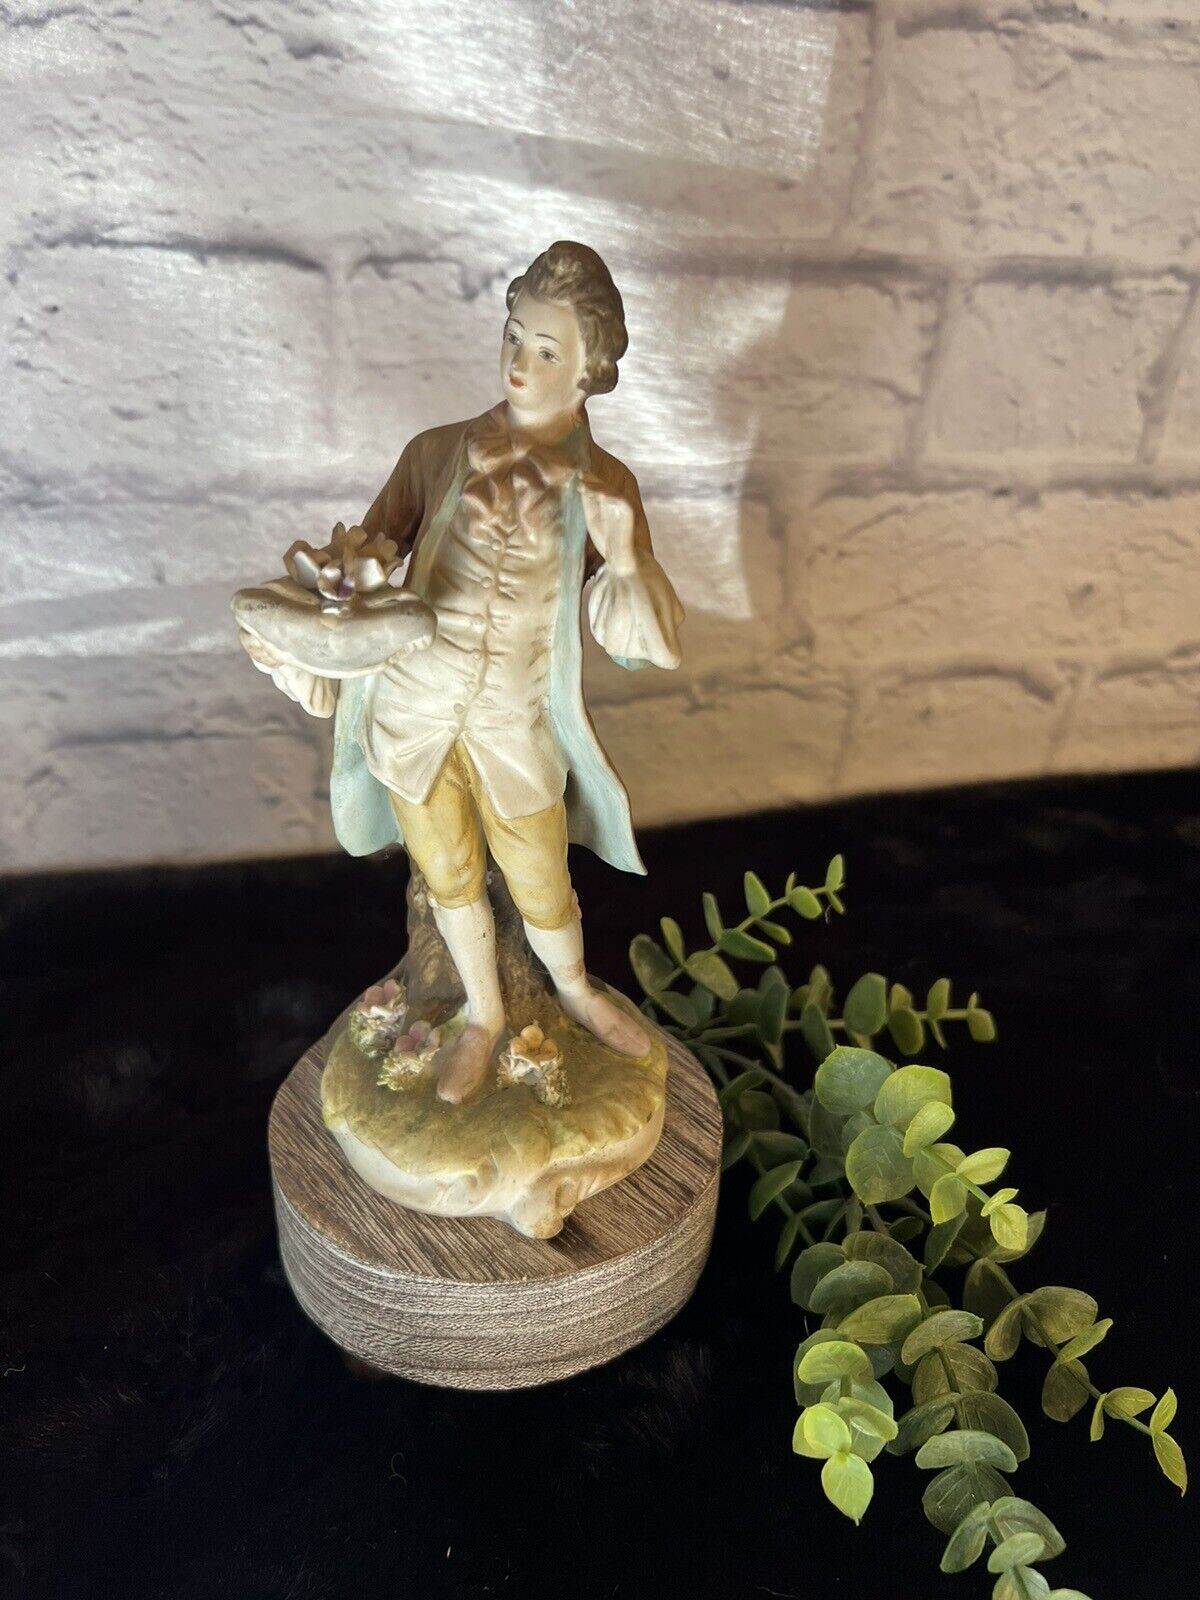 Lefton China George KW3040 - 7.25” Tall - Good Condition - Vintage - Figurine